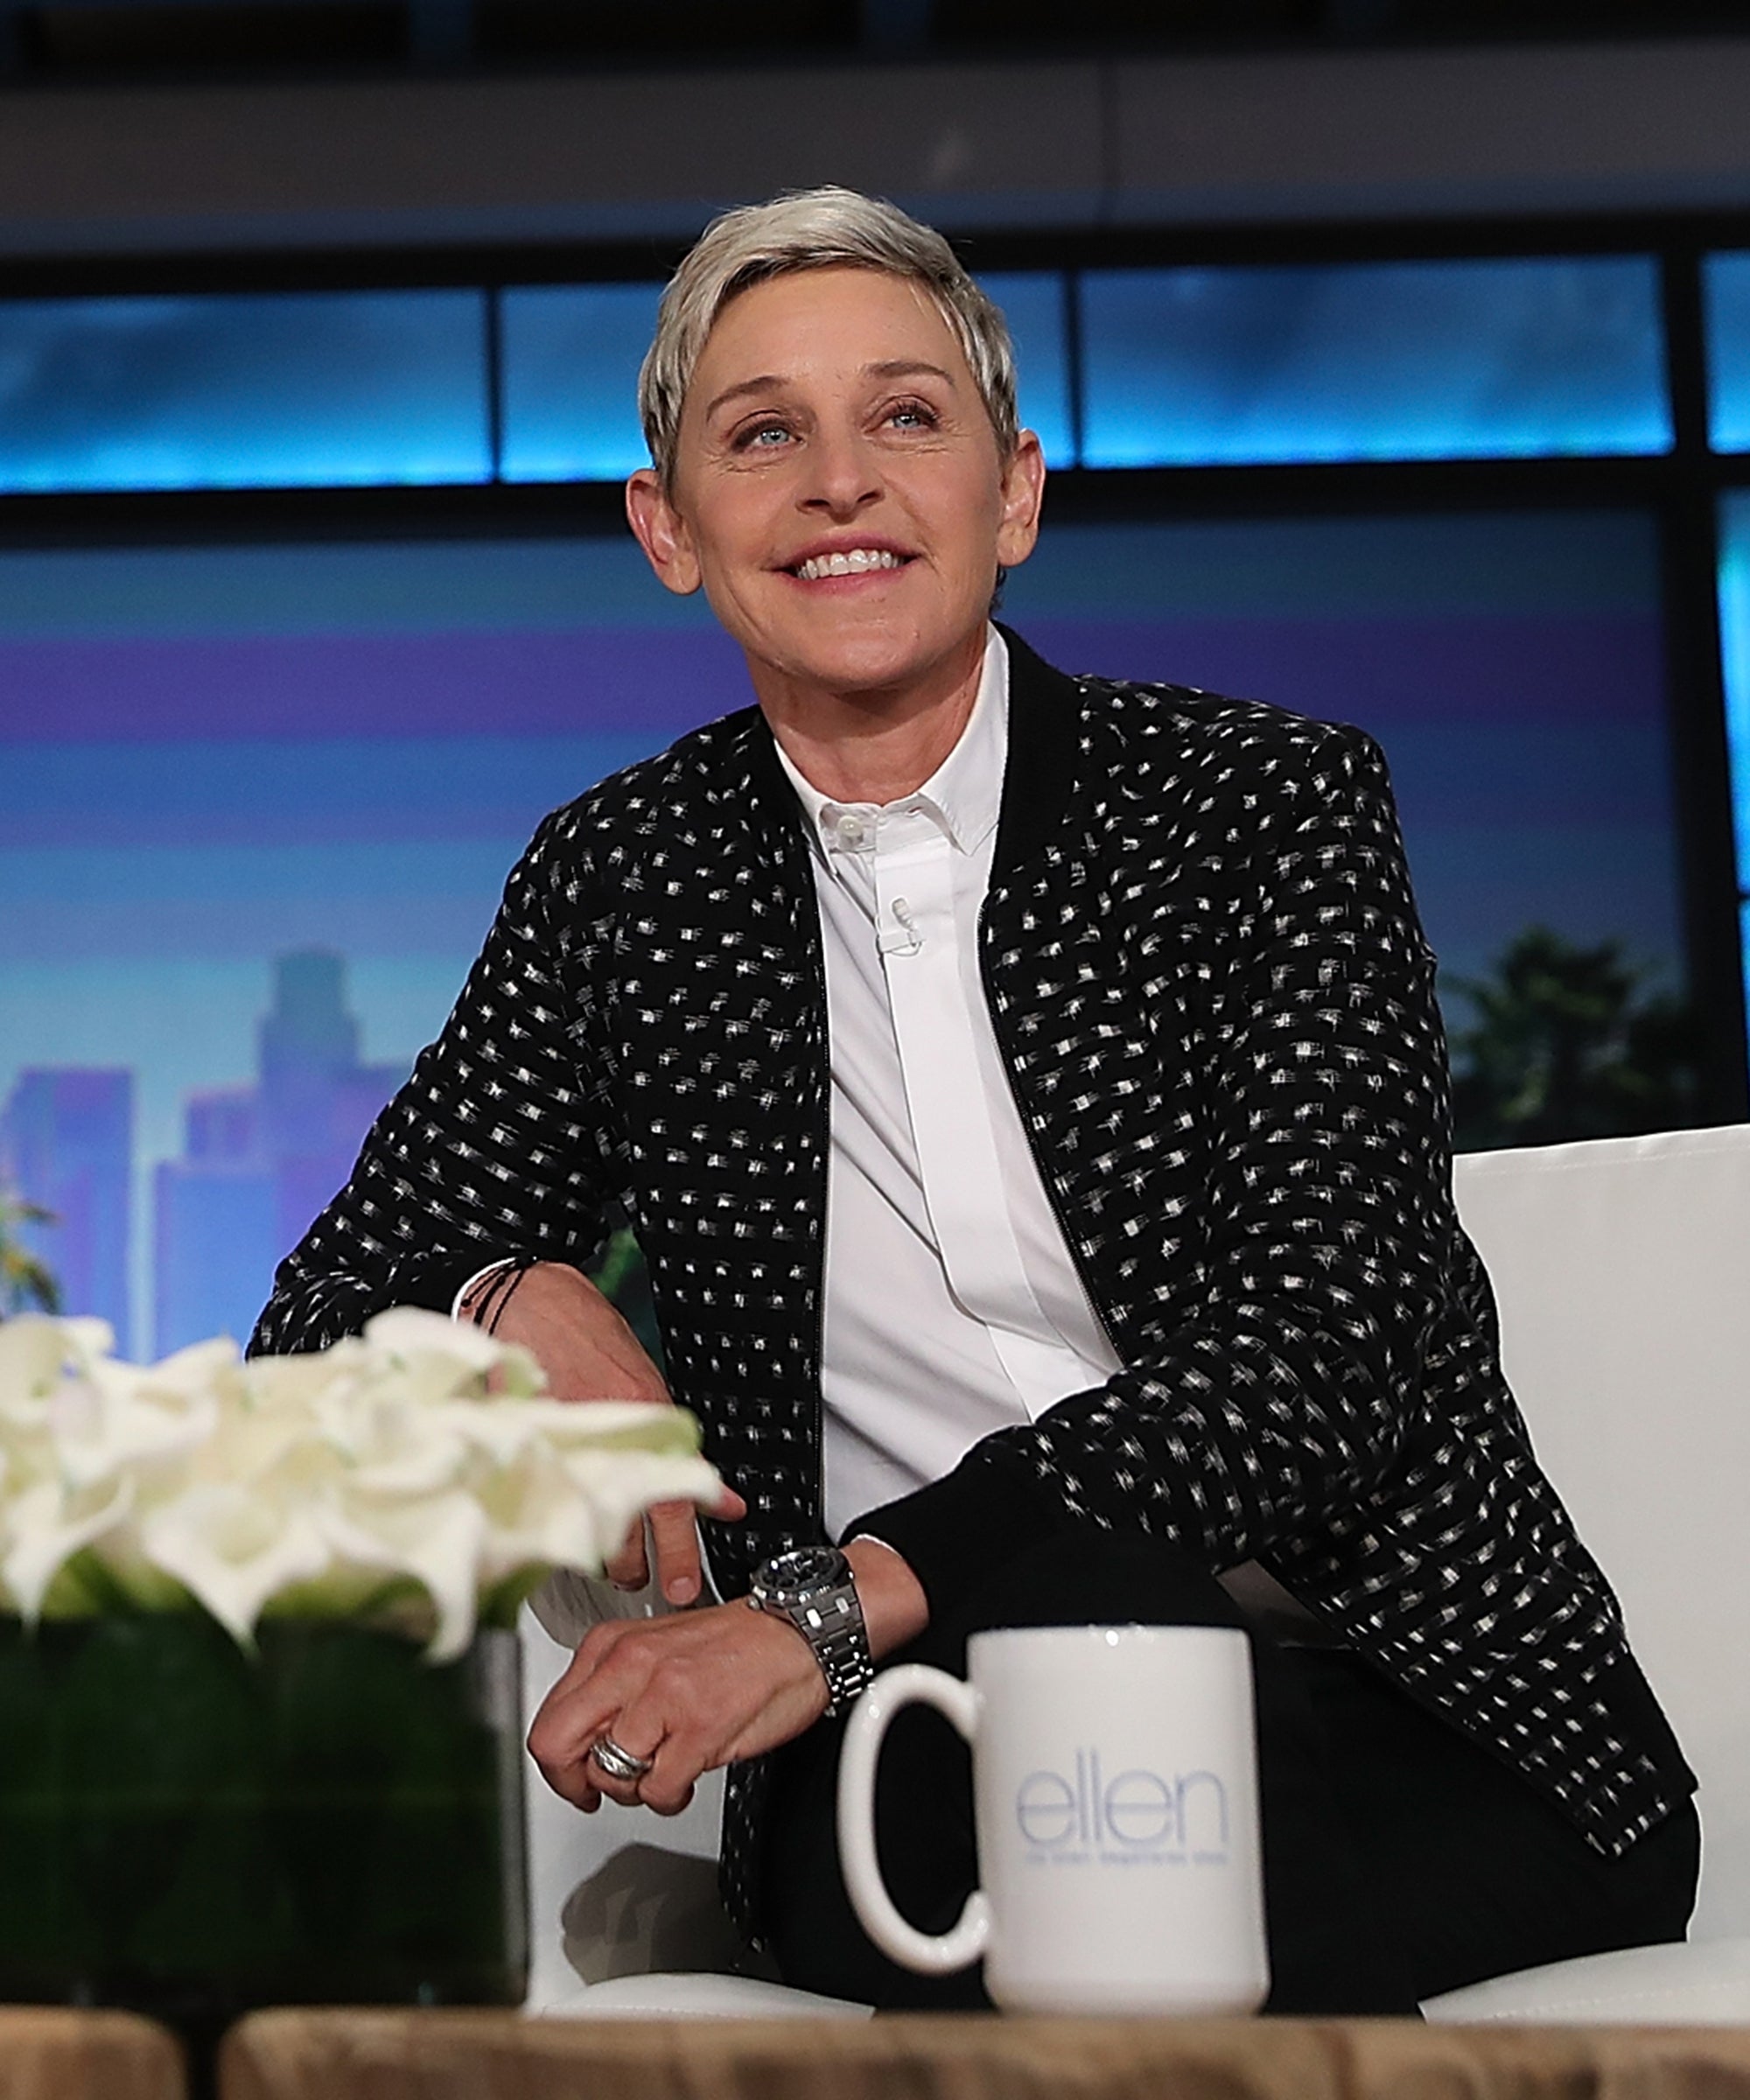 Ellen DeGeneres To End Daytime Talk Show In 2022